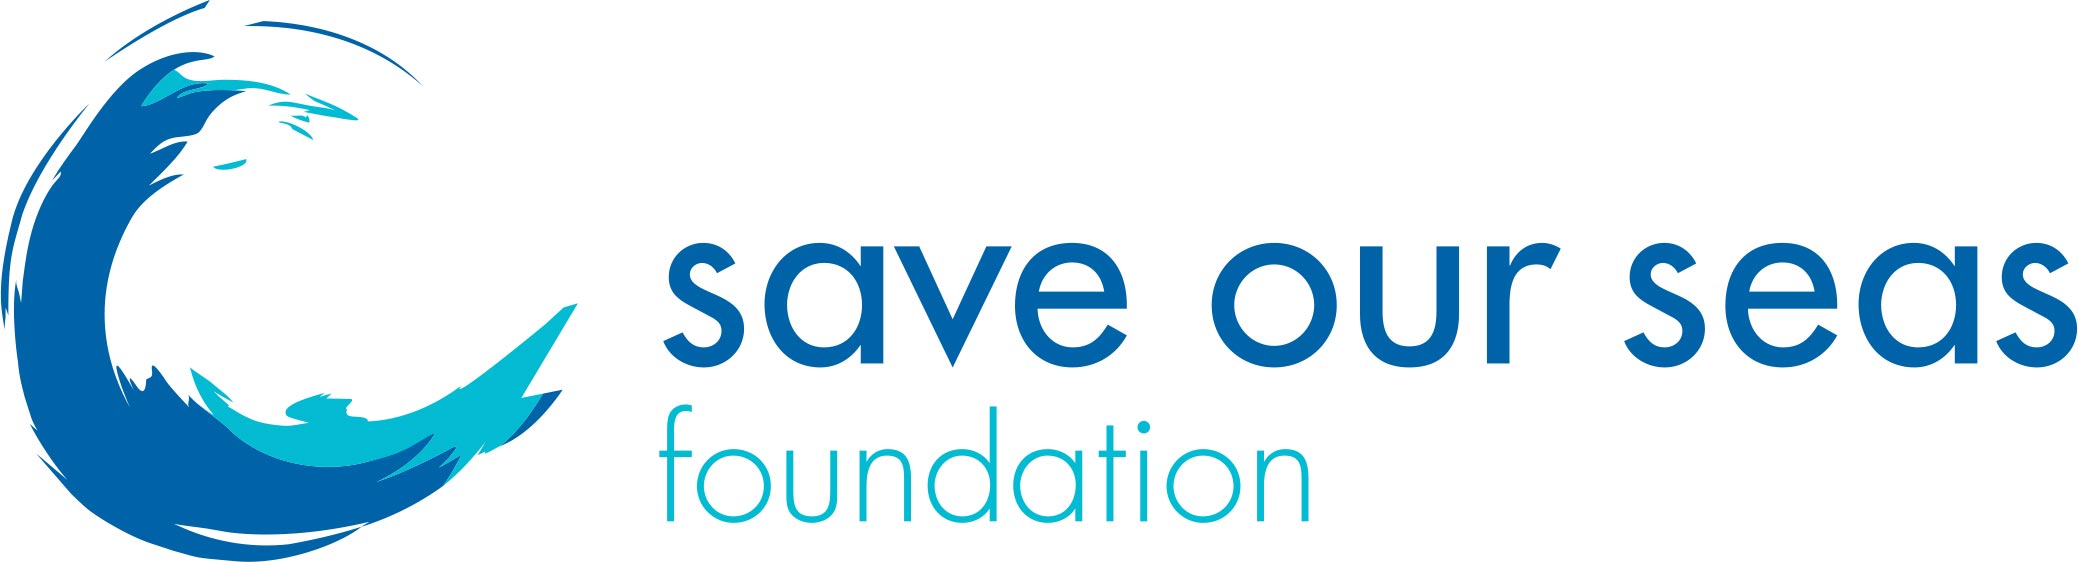 SOSF-Save-Our-Seas-Foundation-Logo-20150519-Hor-L.jpg